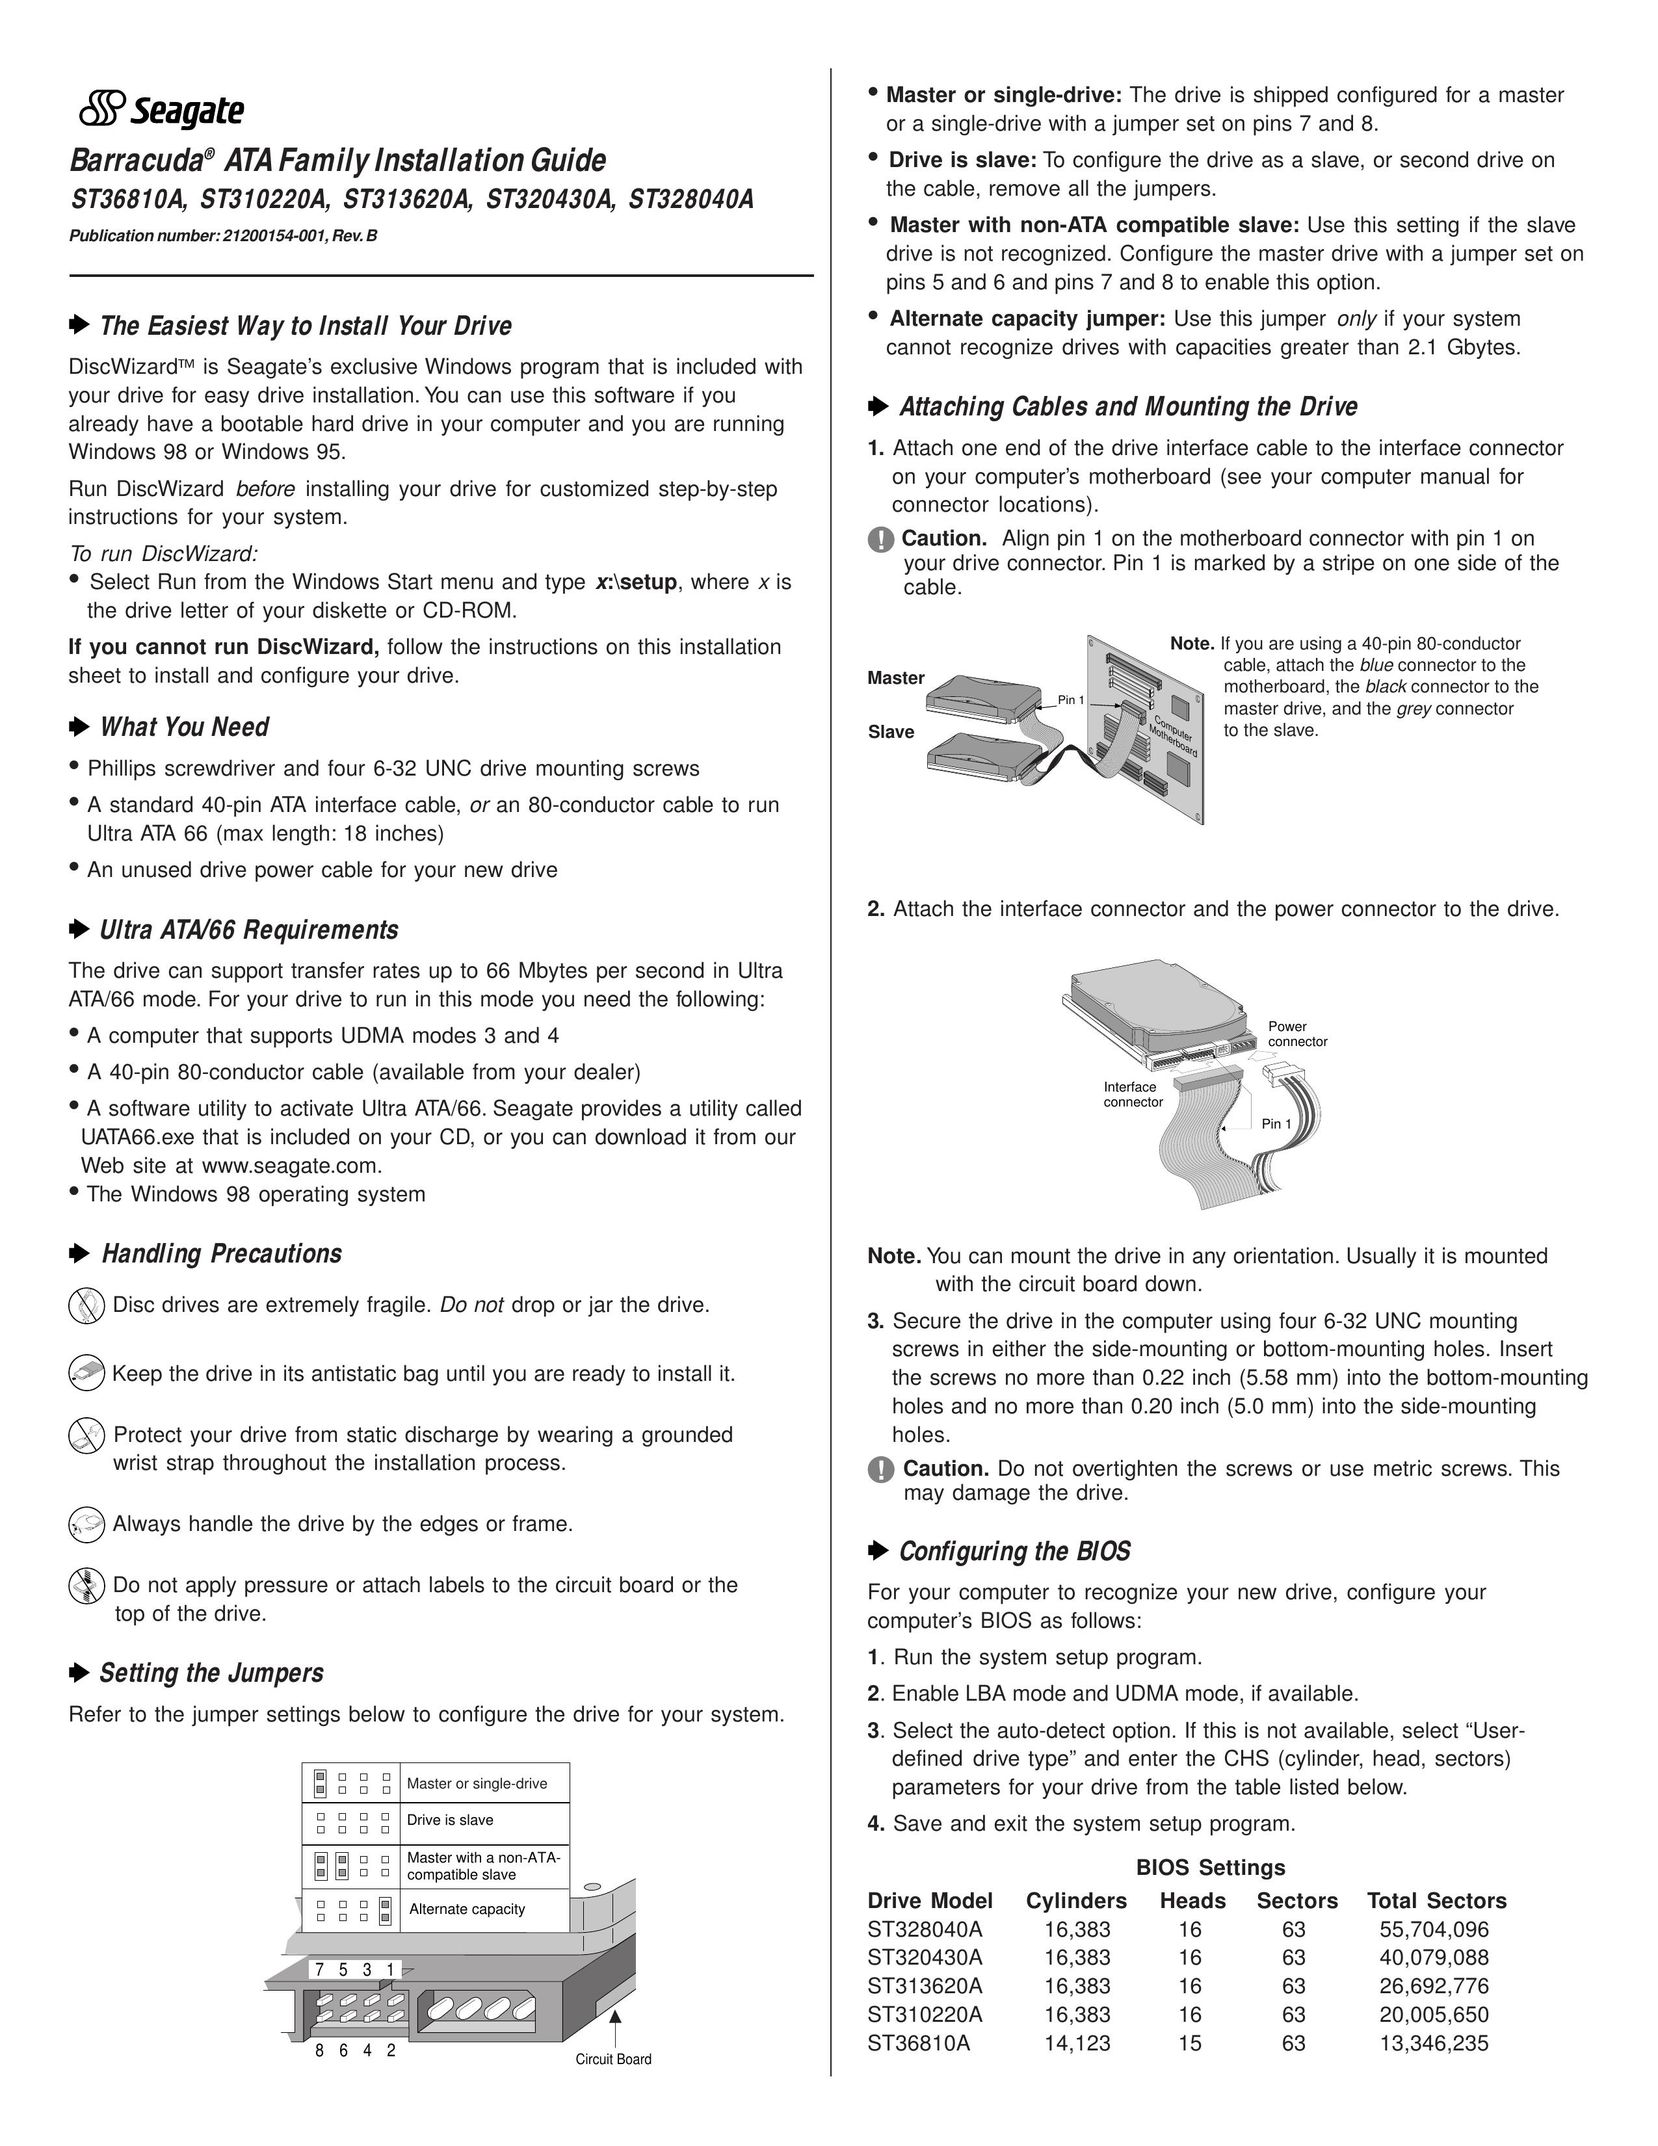 Barracuda Networks ST313620A Computer Drive User Manual